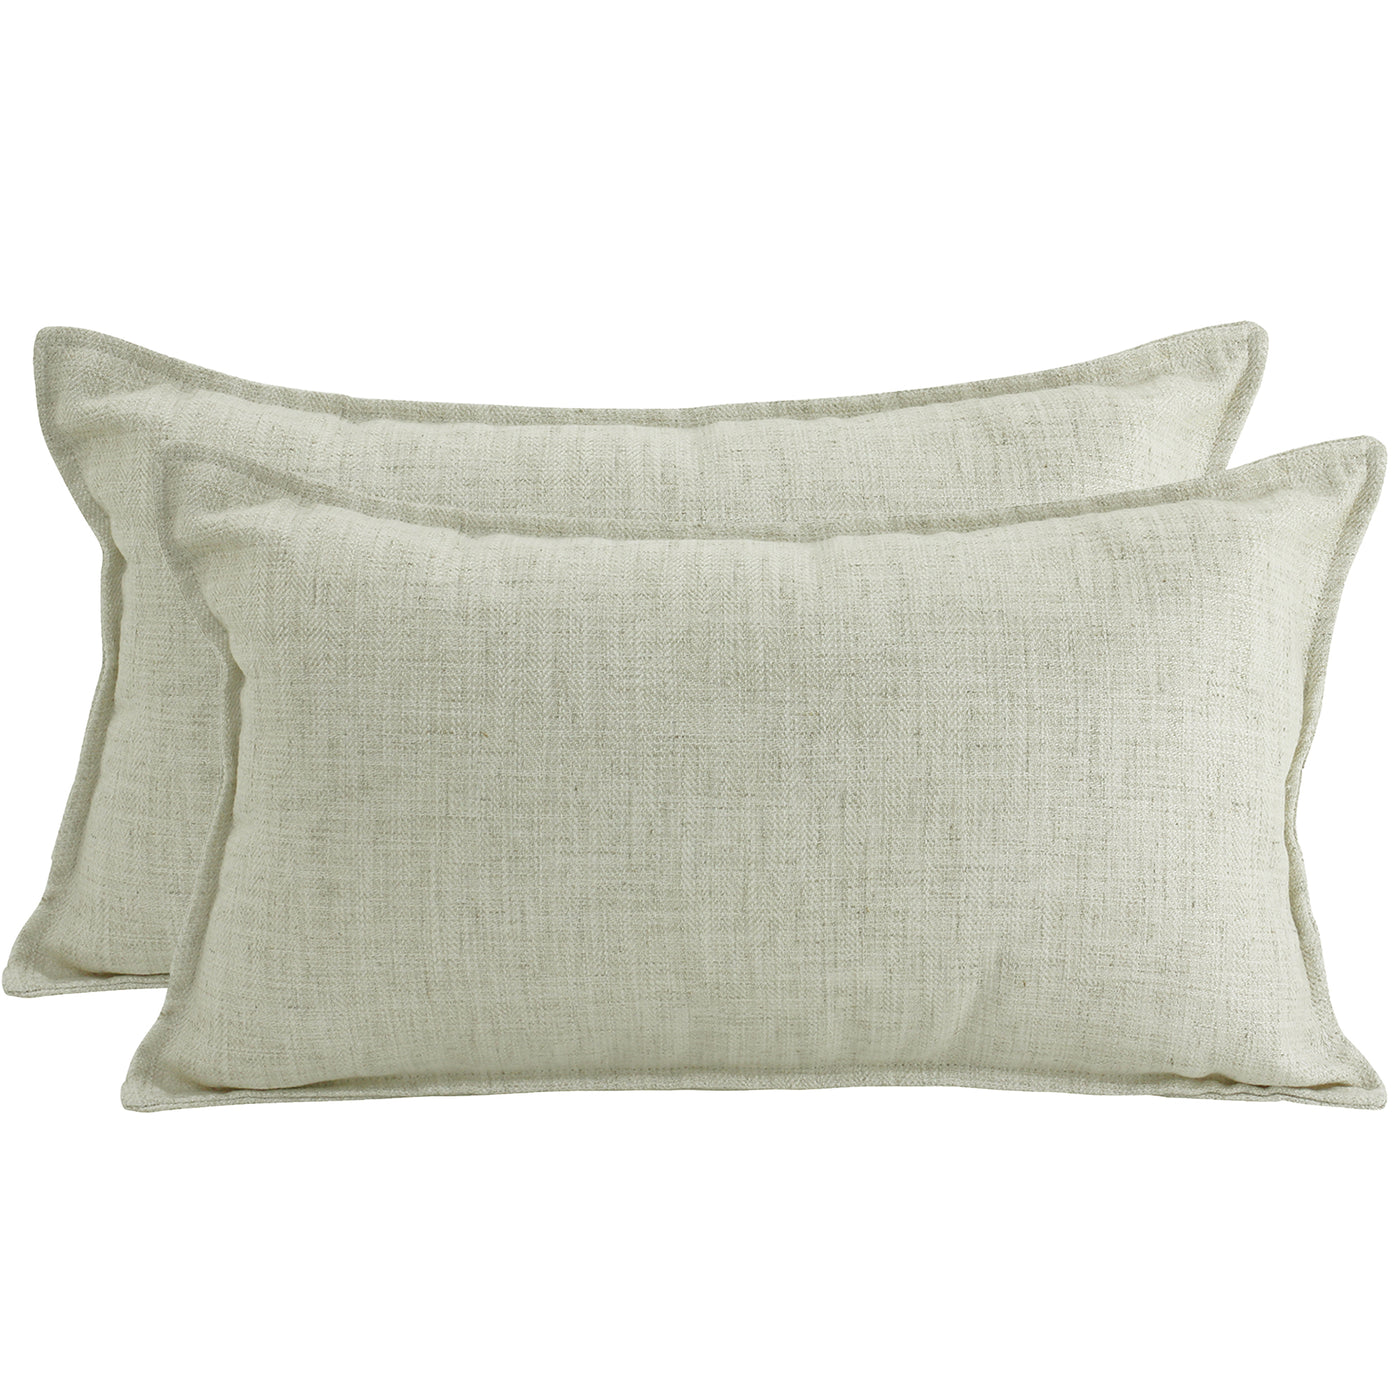 Linen Beige Cushion 30x50cm